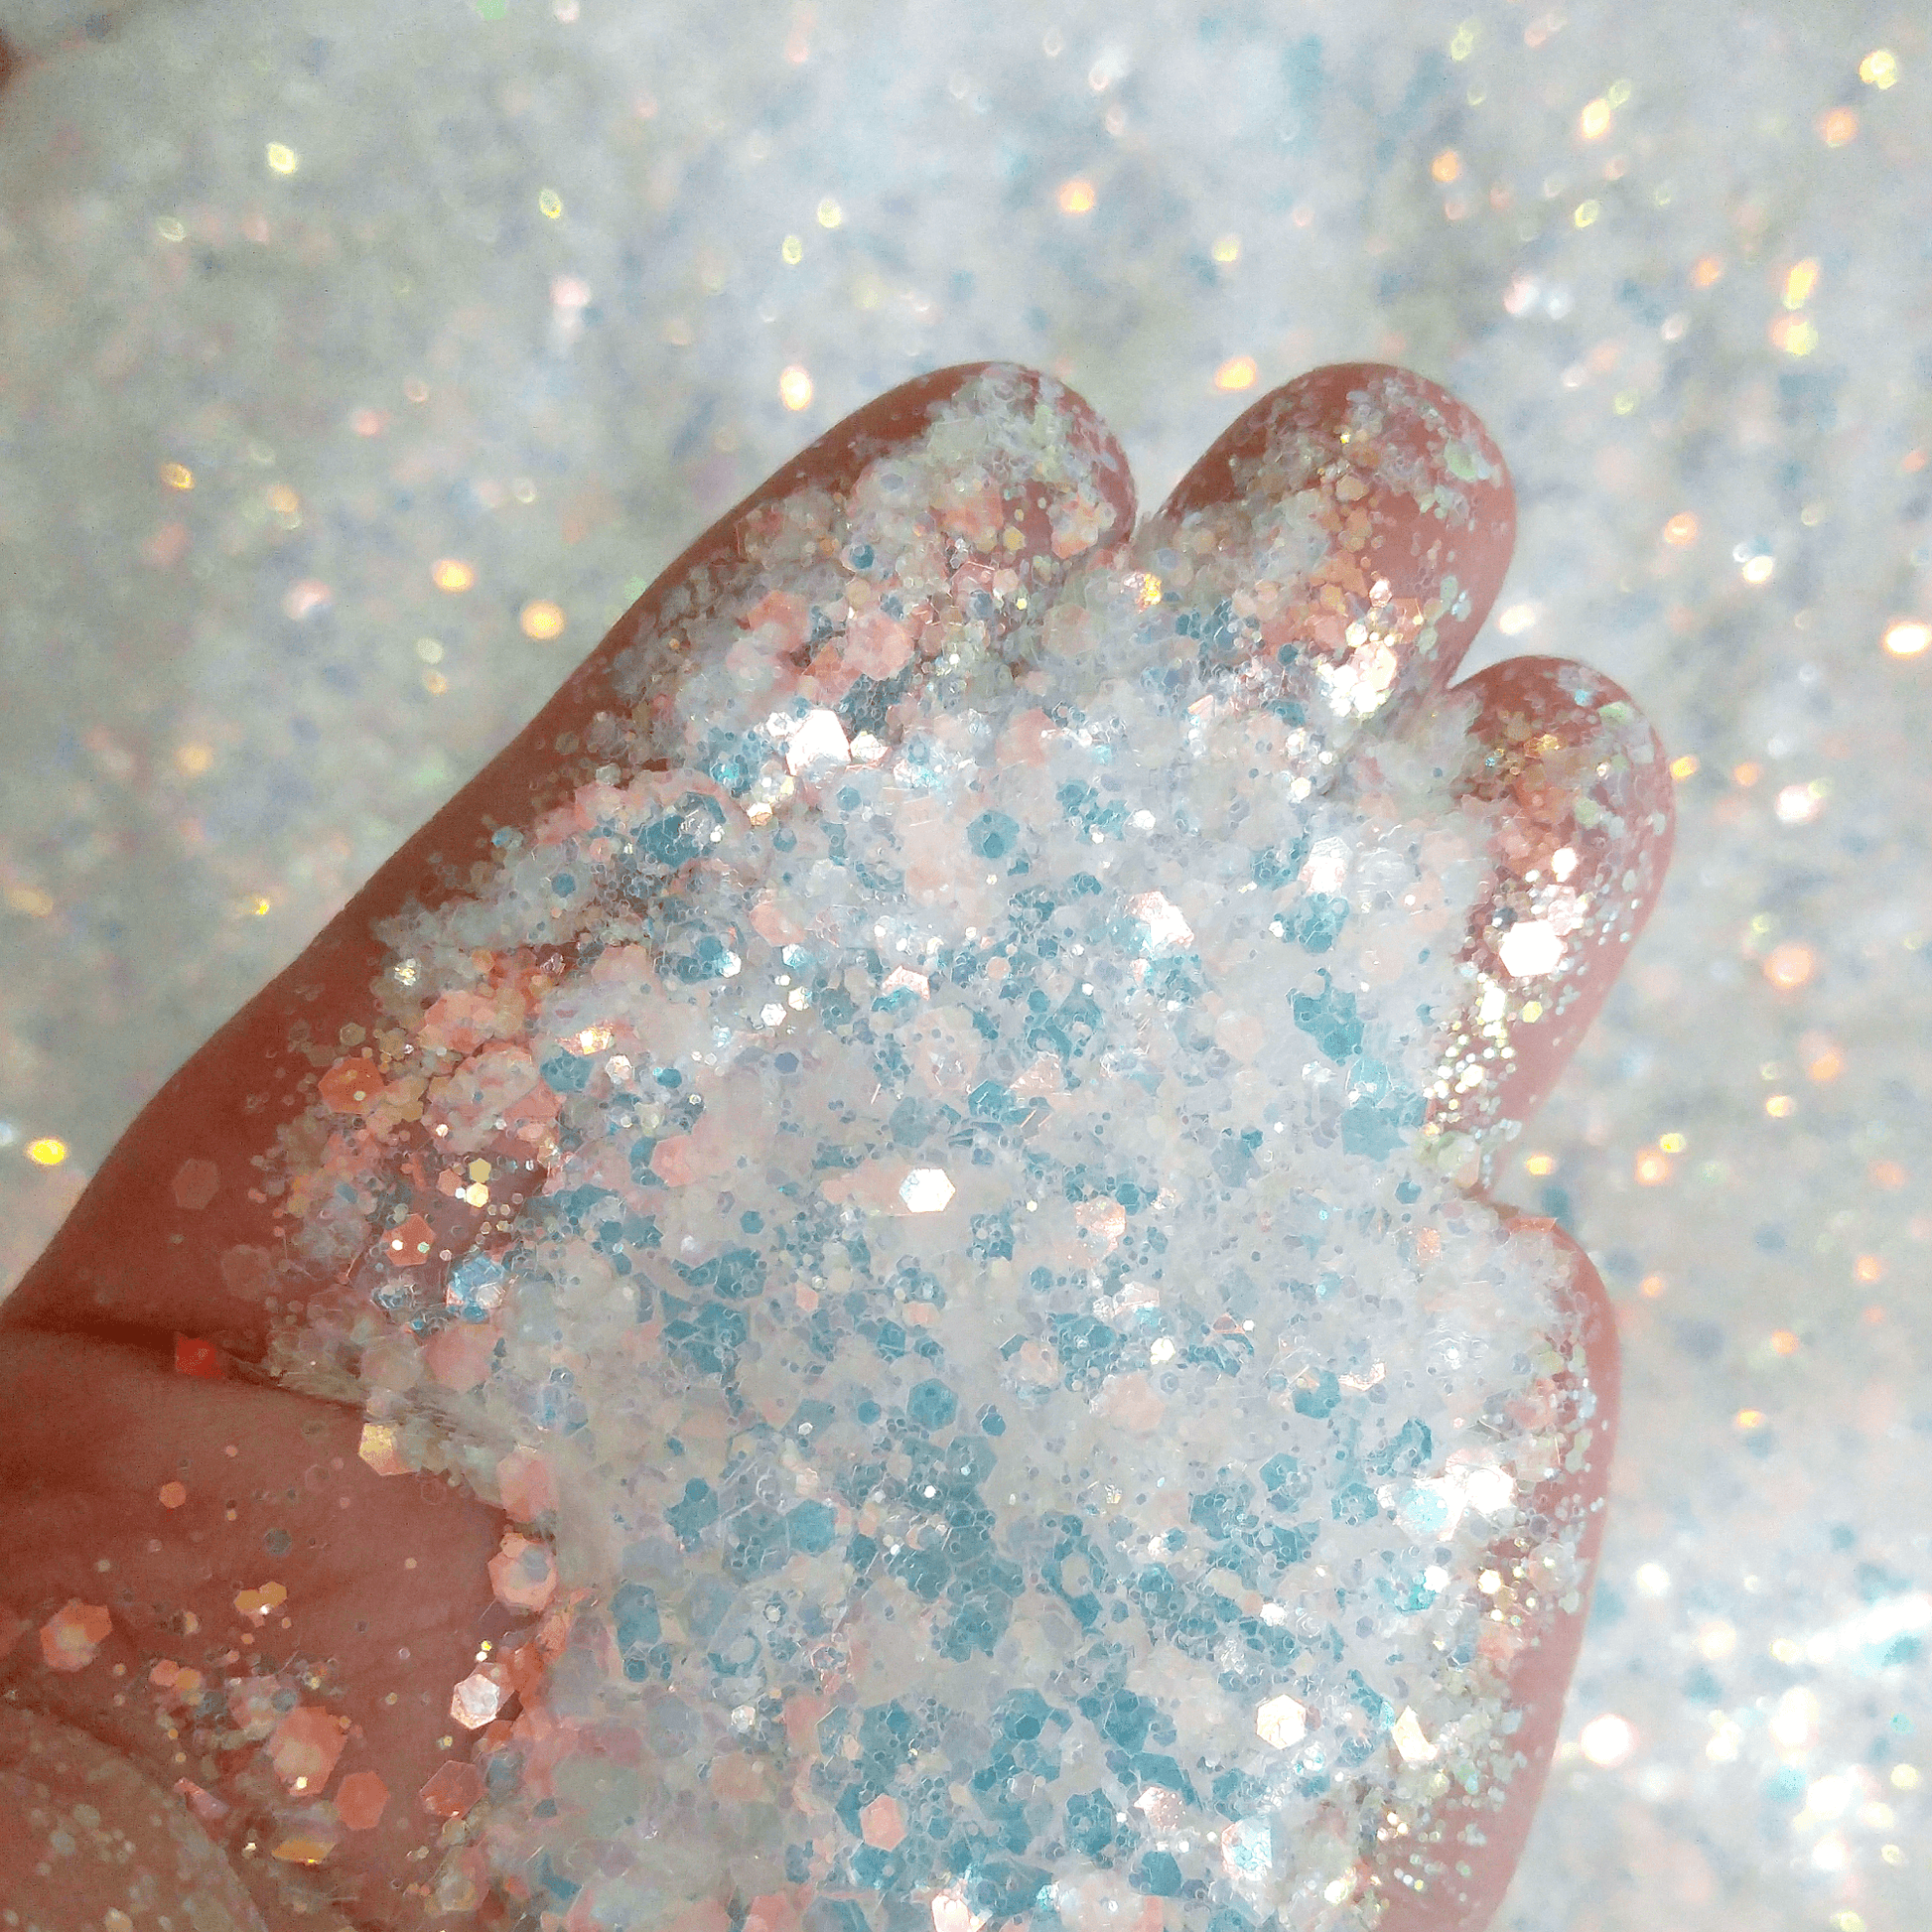 White Opal Iridescent Hexagon Glitter Mix - Snow Drops  By Crazoulis Glitter